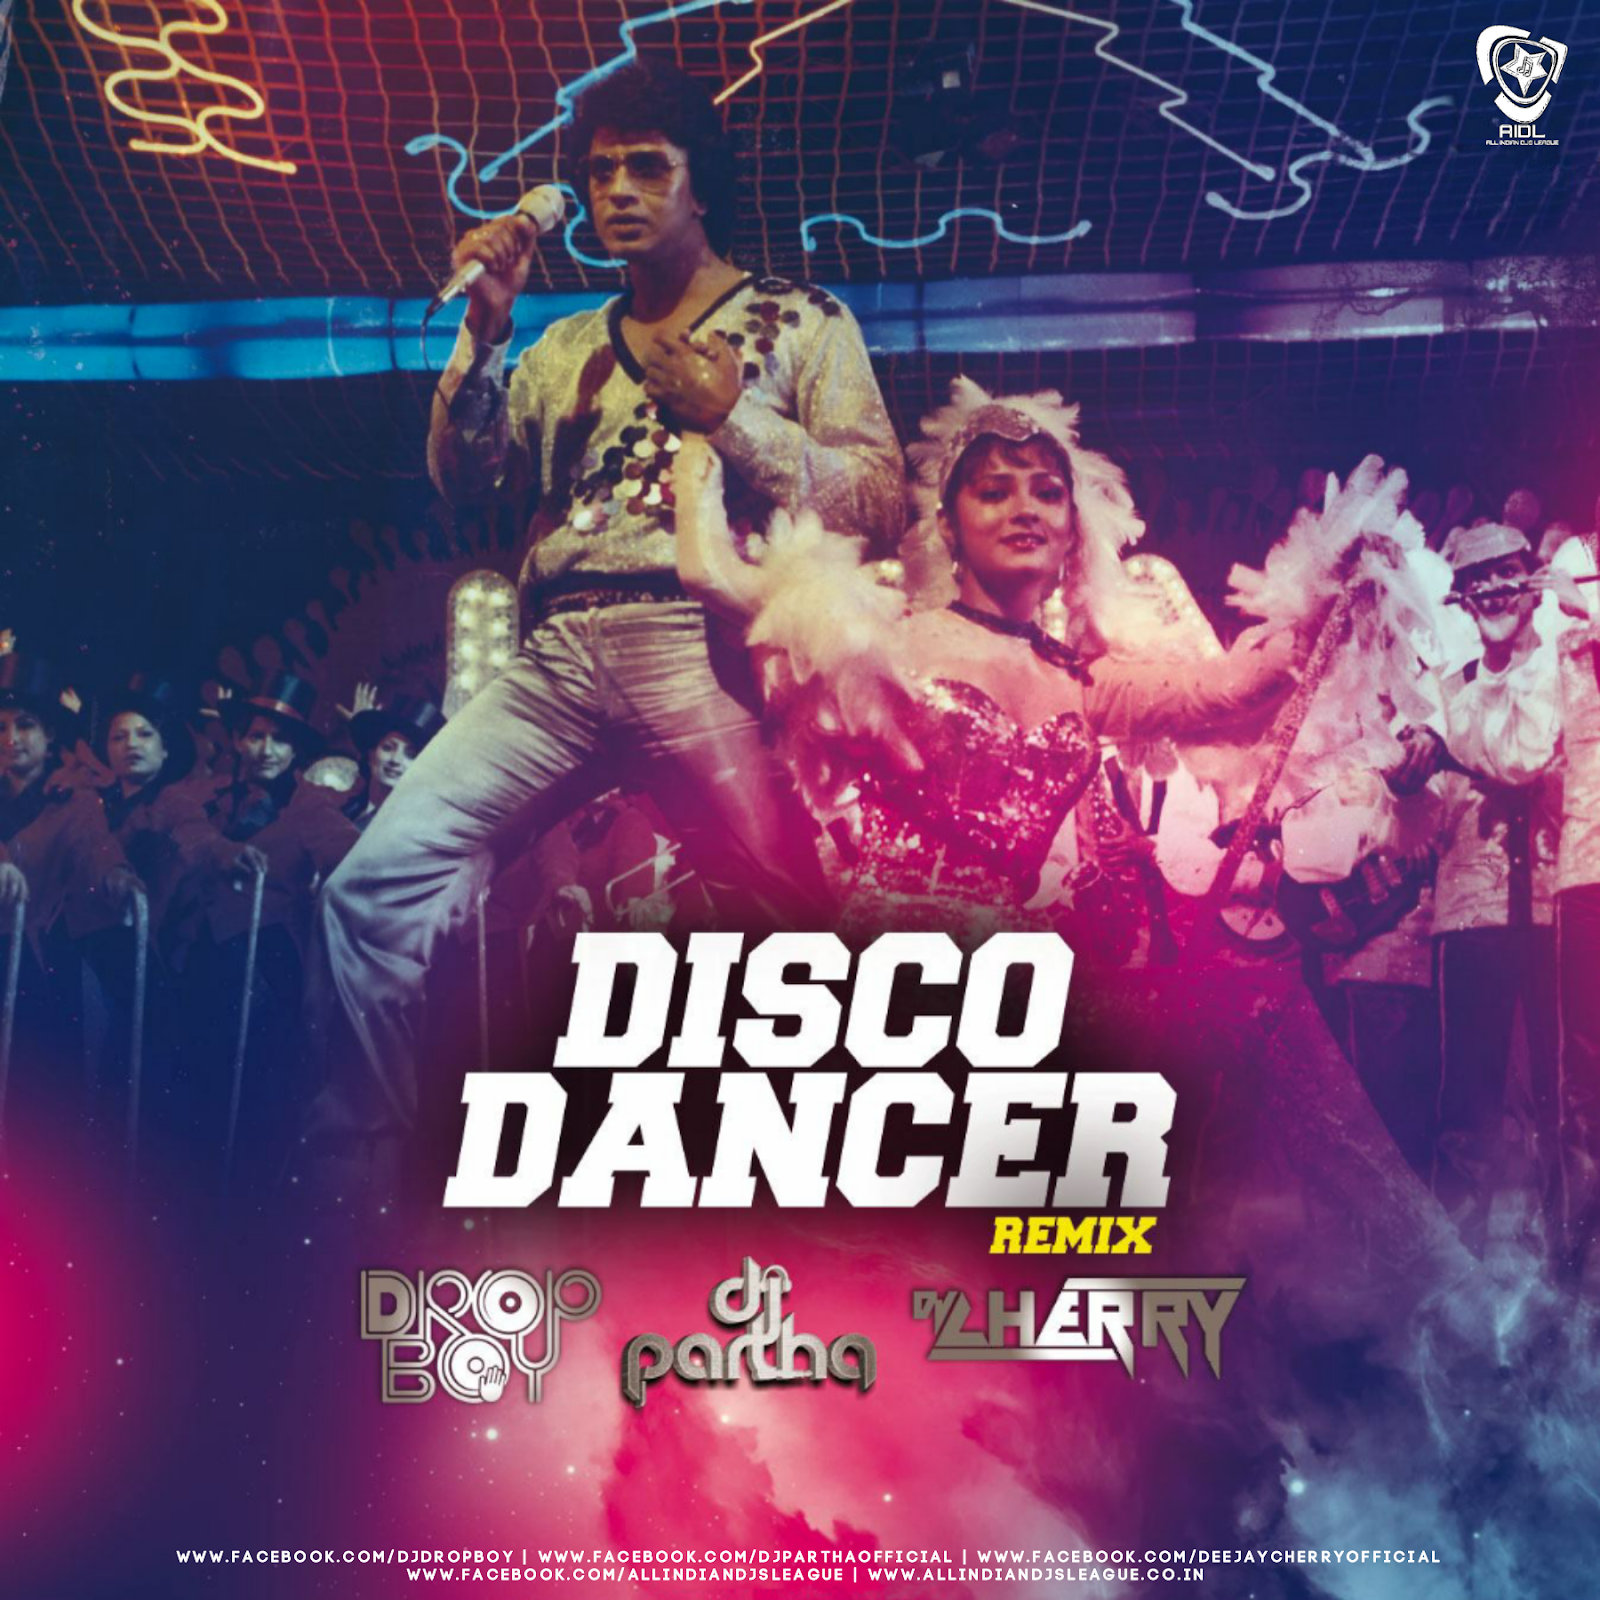 Dancing remix mp3. Танцор диско. Диско денсер. «Танцор диско» / Disco Dancer. Танцовщица диско.